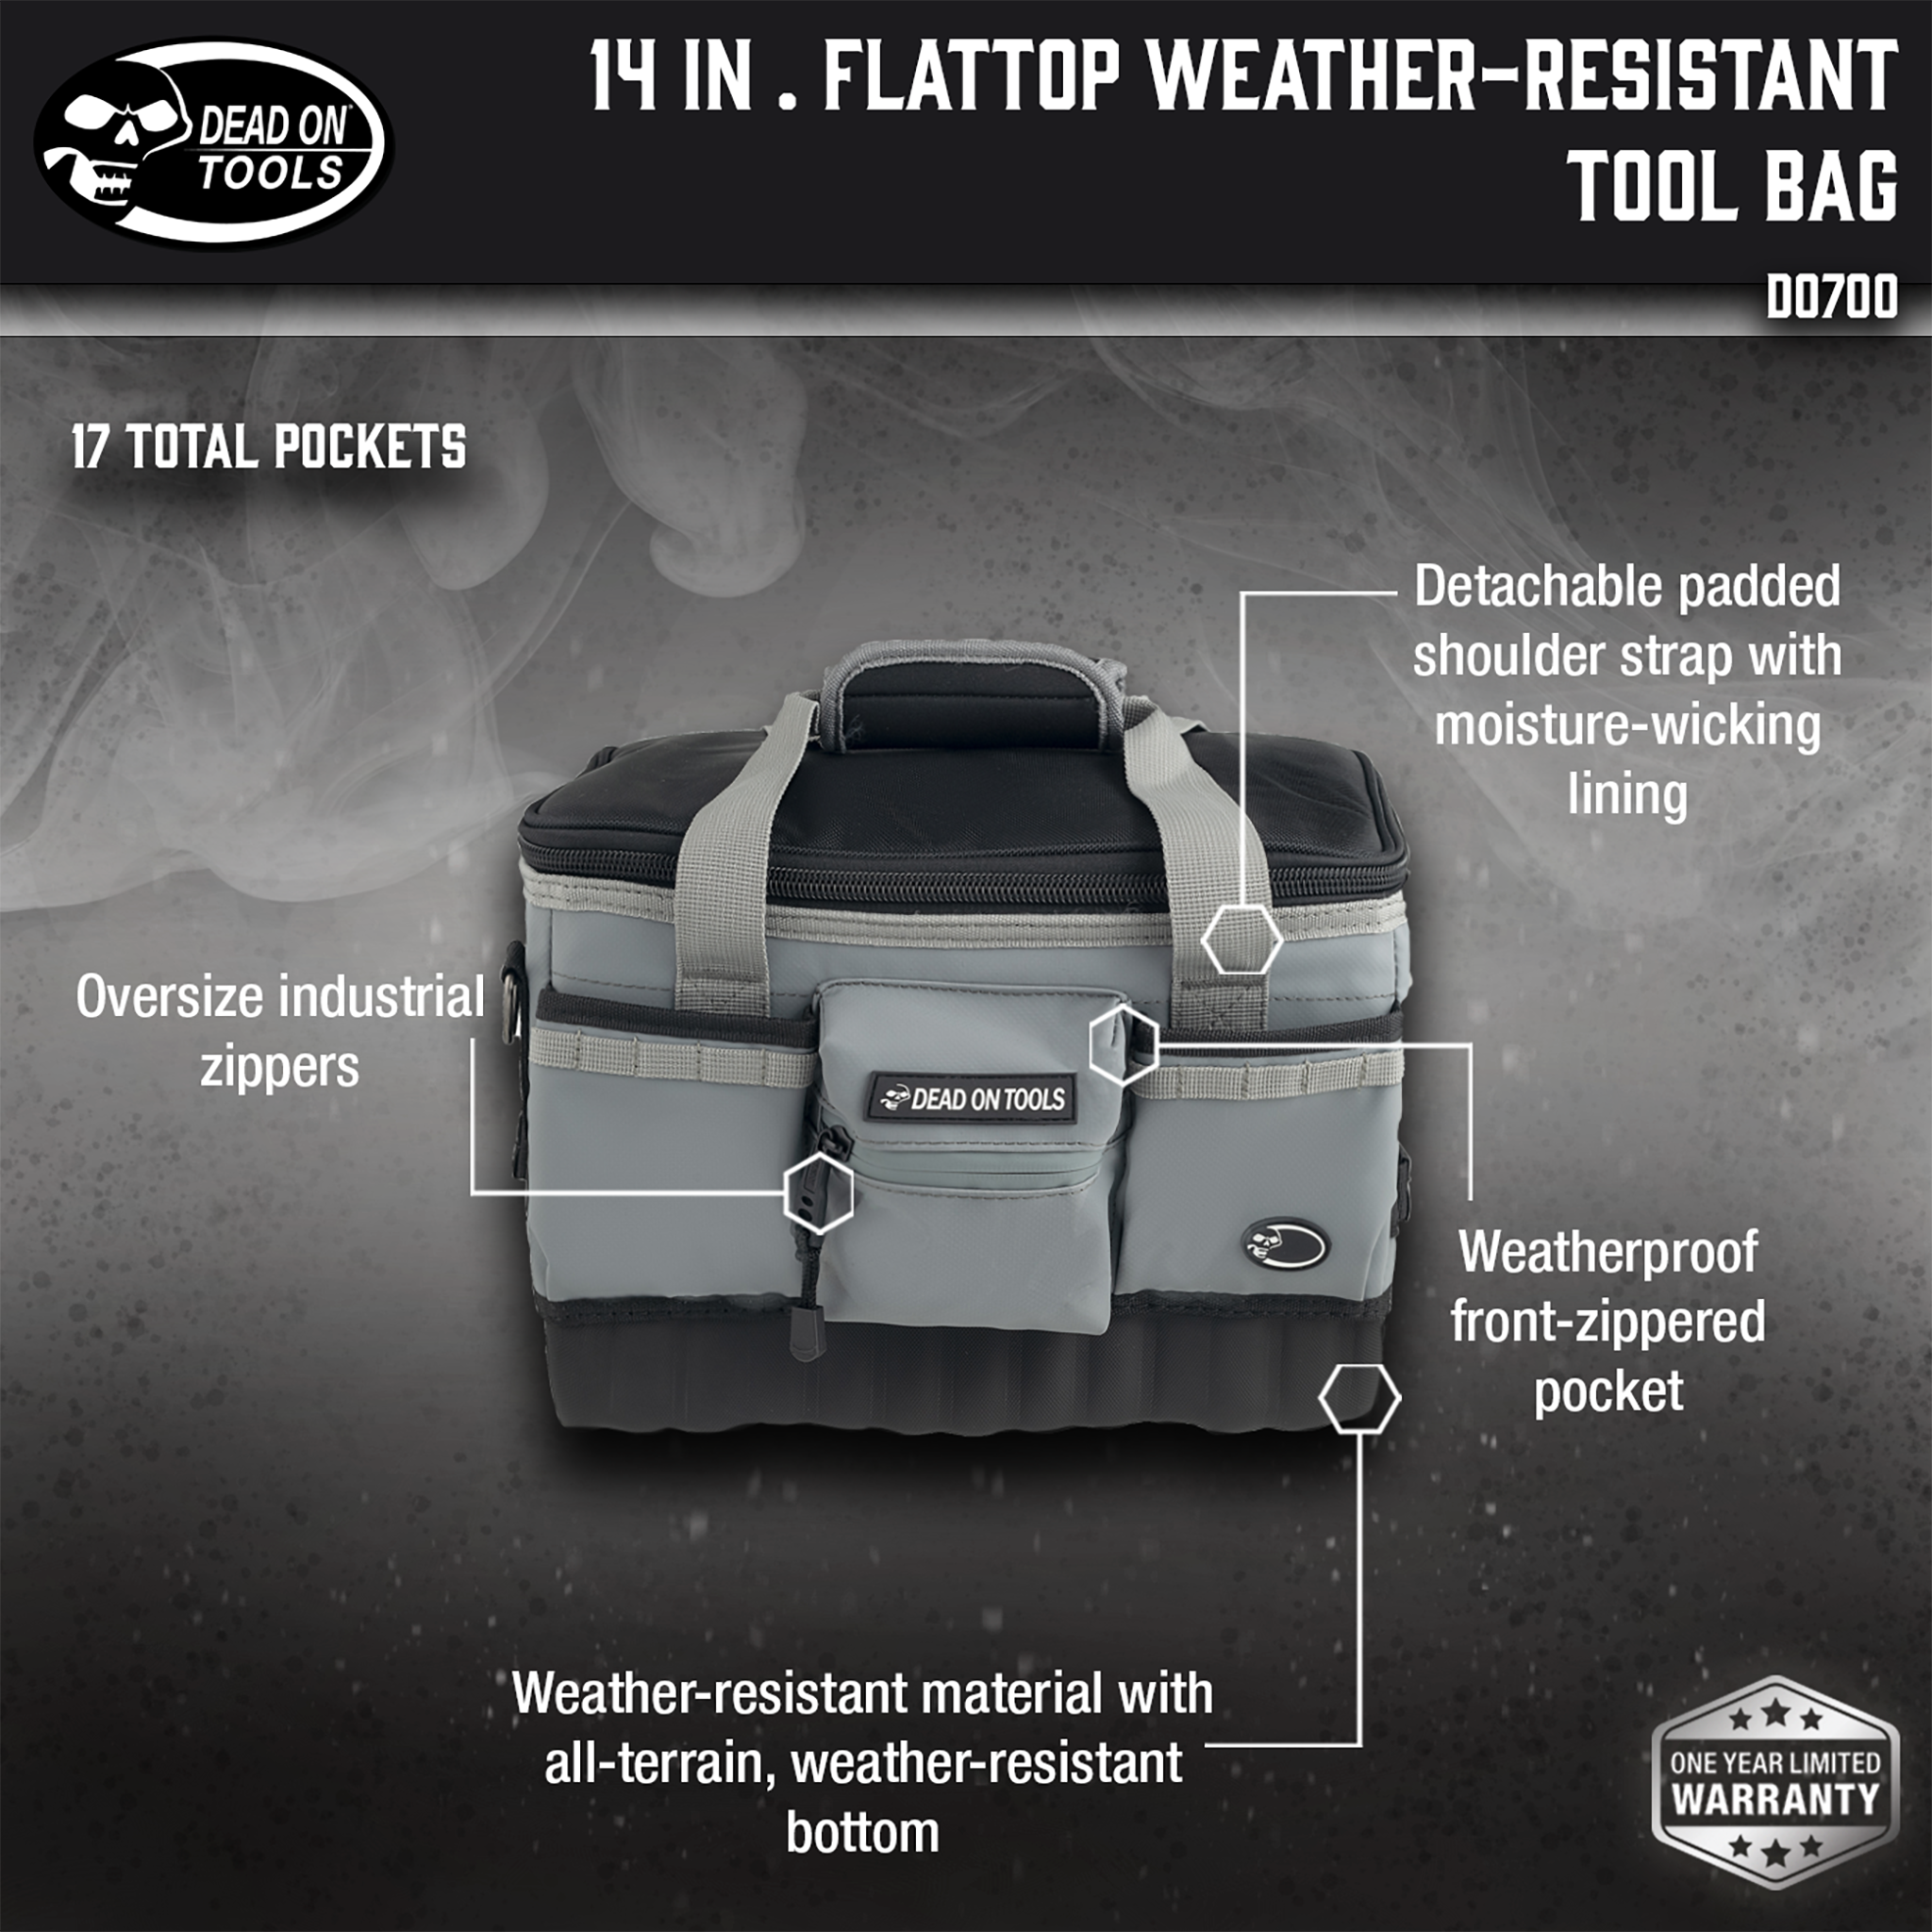 14 in. FlatTop Weather-Resistant Tool Bag